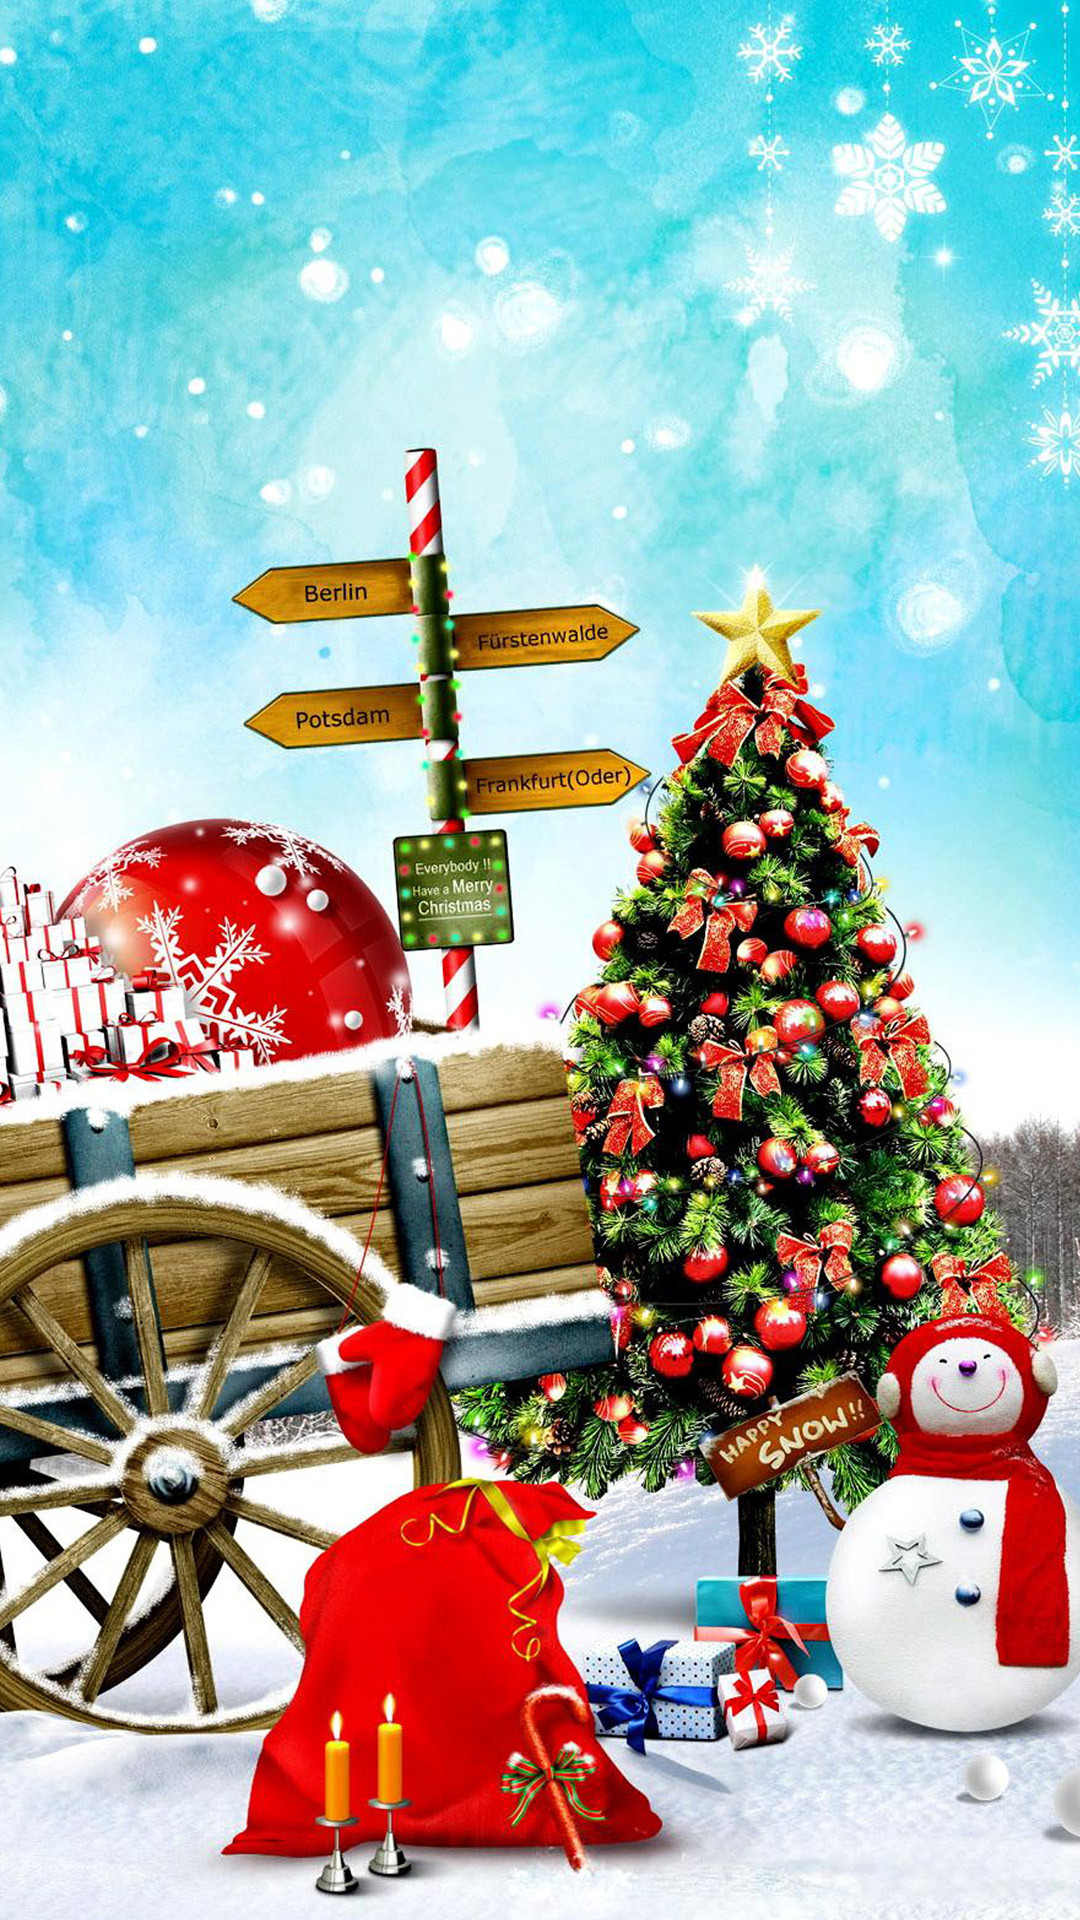 Free Christmas Wallpaper For Phones 18252 Hd Wallpapers - Merry Christmas Whatsapp Dp , HD Wallpaper & Backgrounds